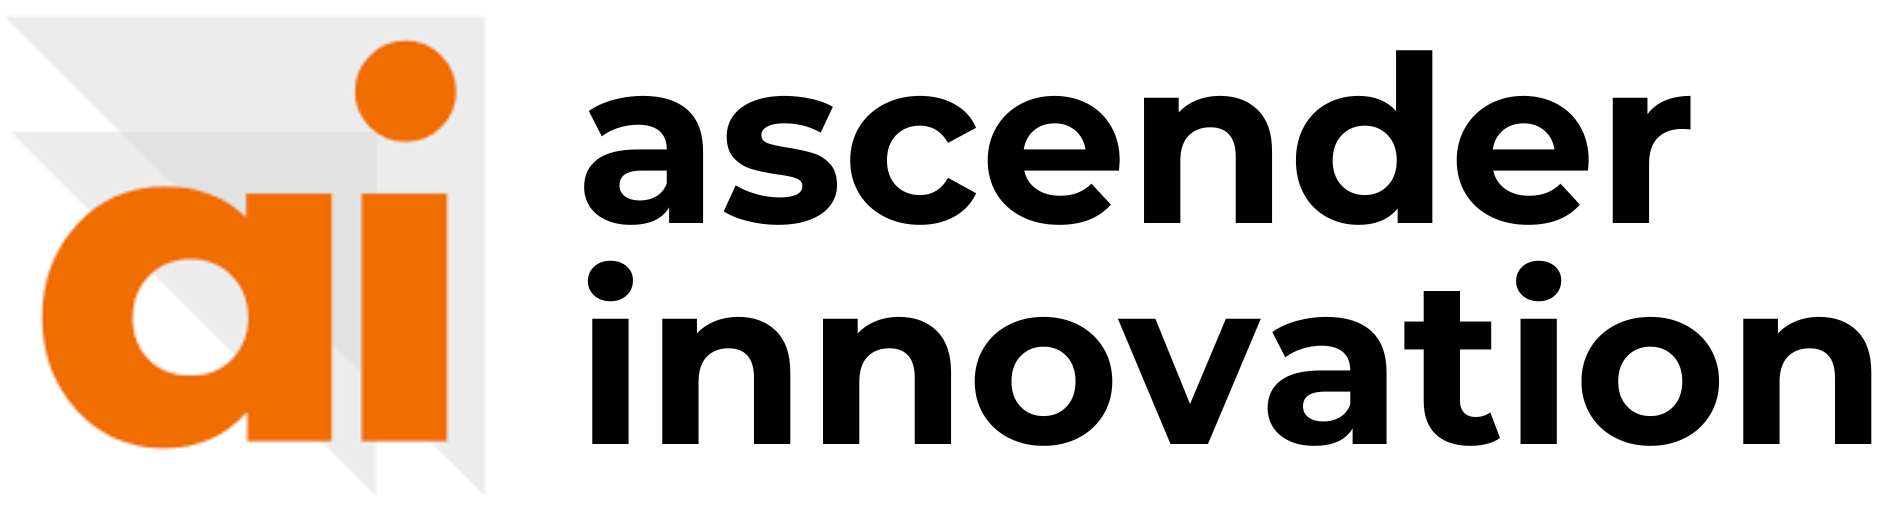 ascender innovation logo